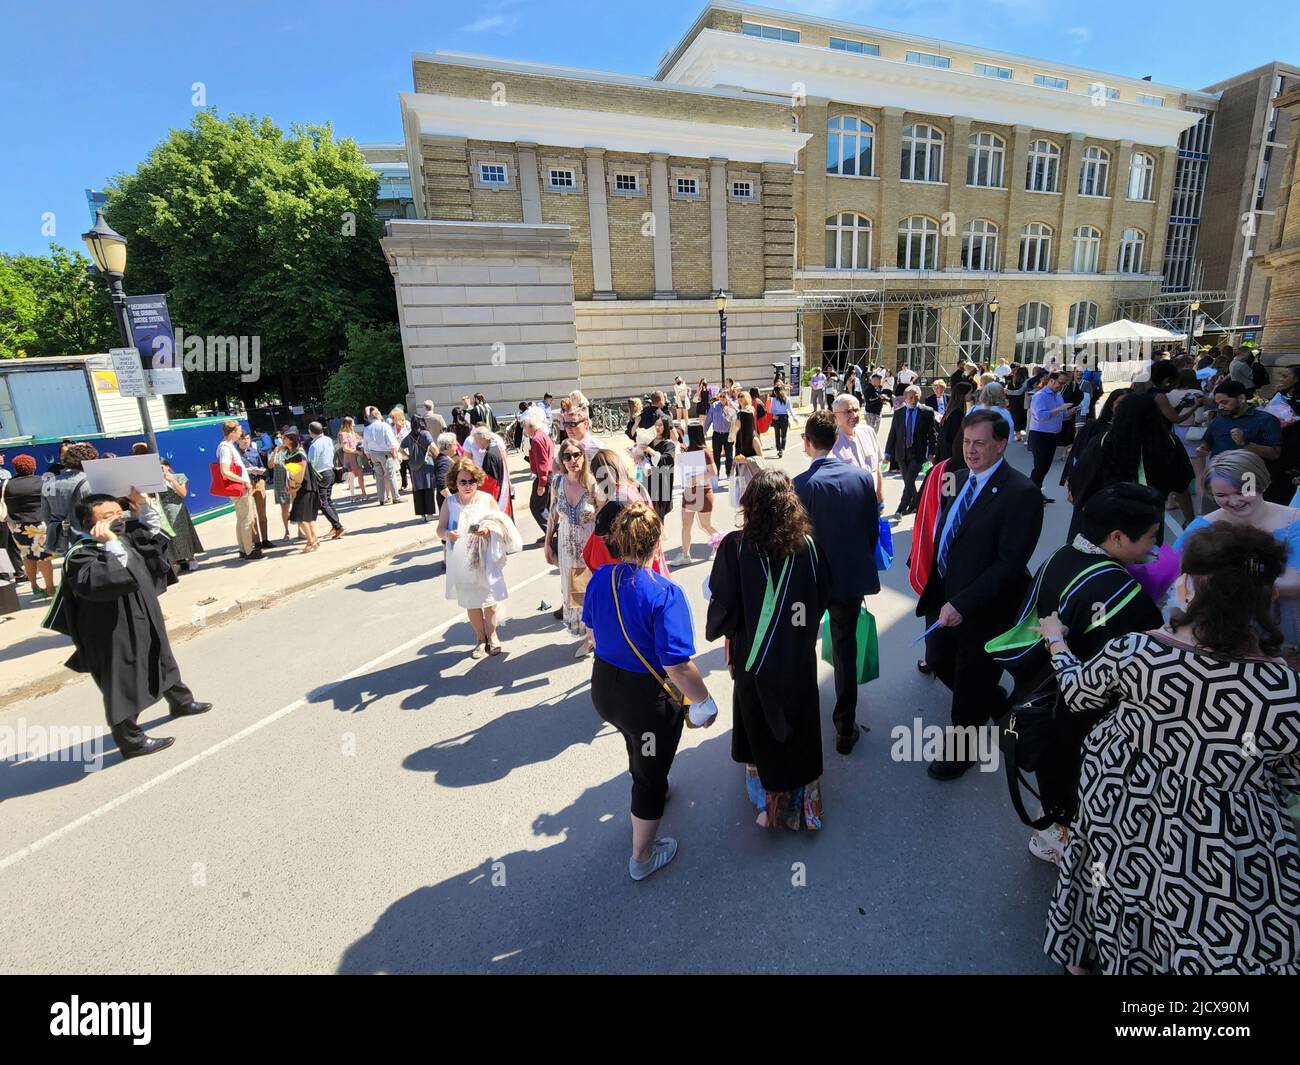 University of Toronto Convocation Hall Graduation, Toronto Stock Photo